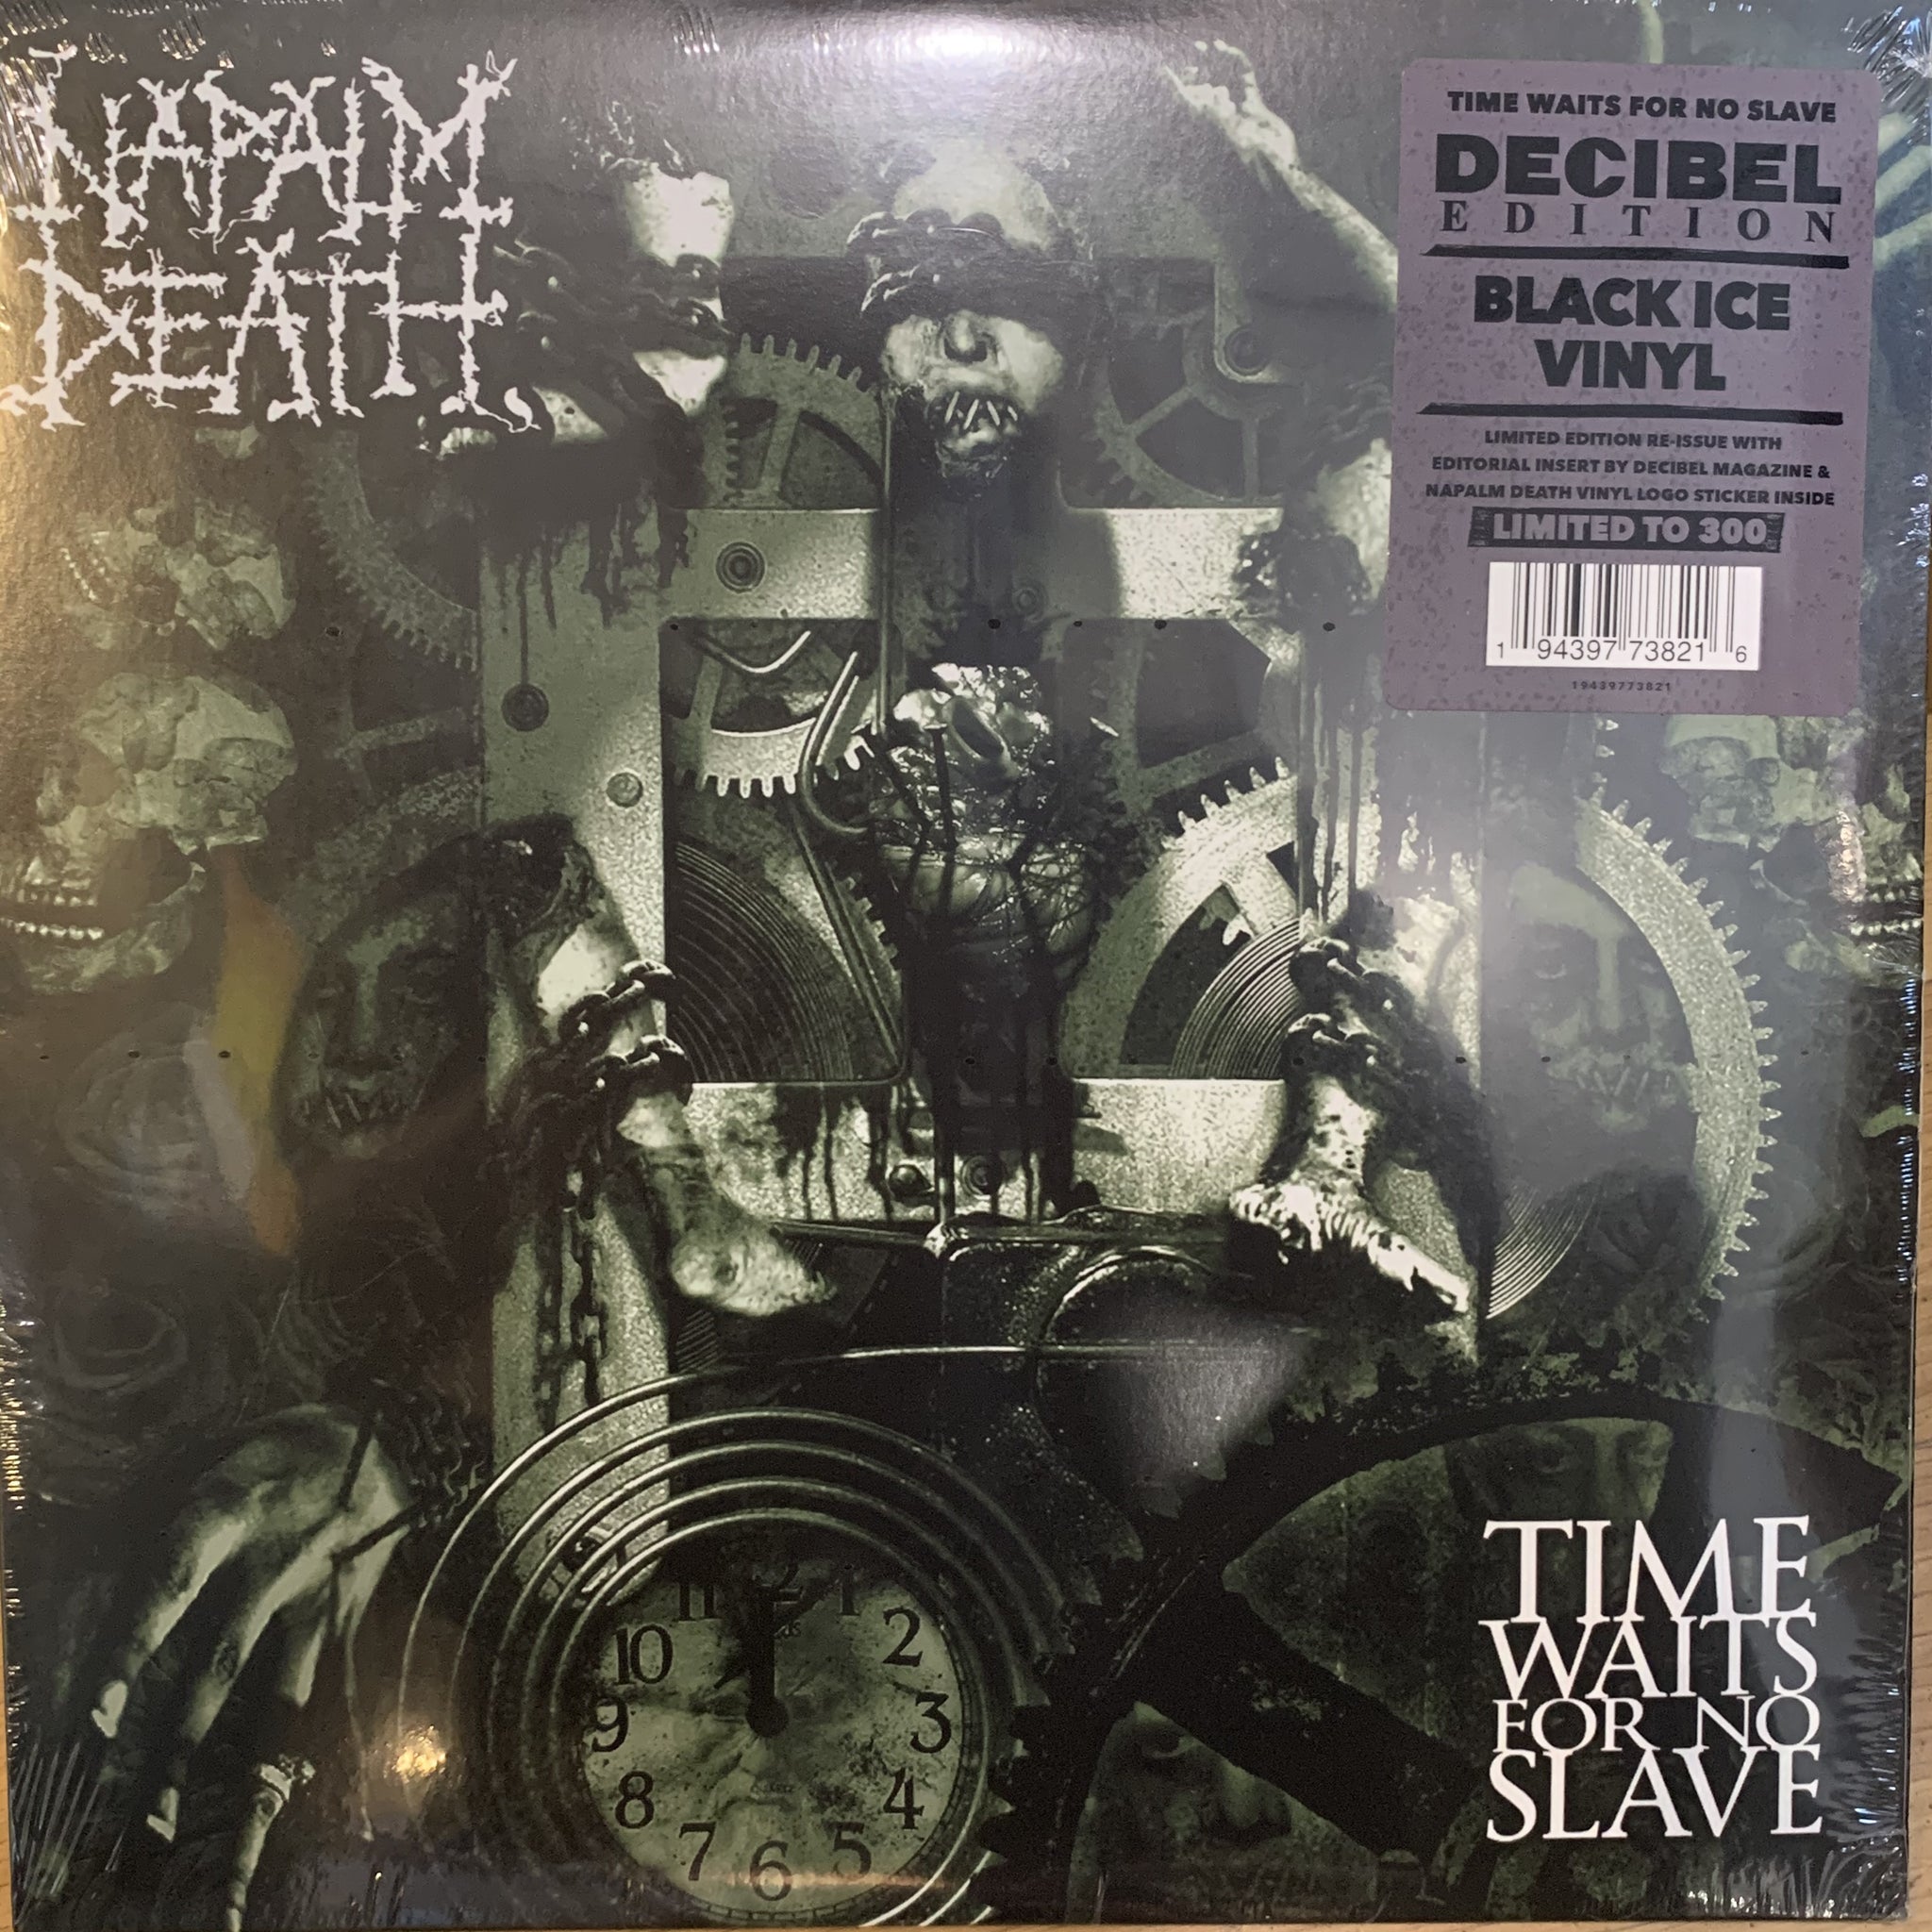 Napalm Death ‎– Time Waits For No Slave (2009) - New LP Record 2020 Decibel Edition Black Ice Vinyl - Grindcore